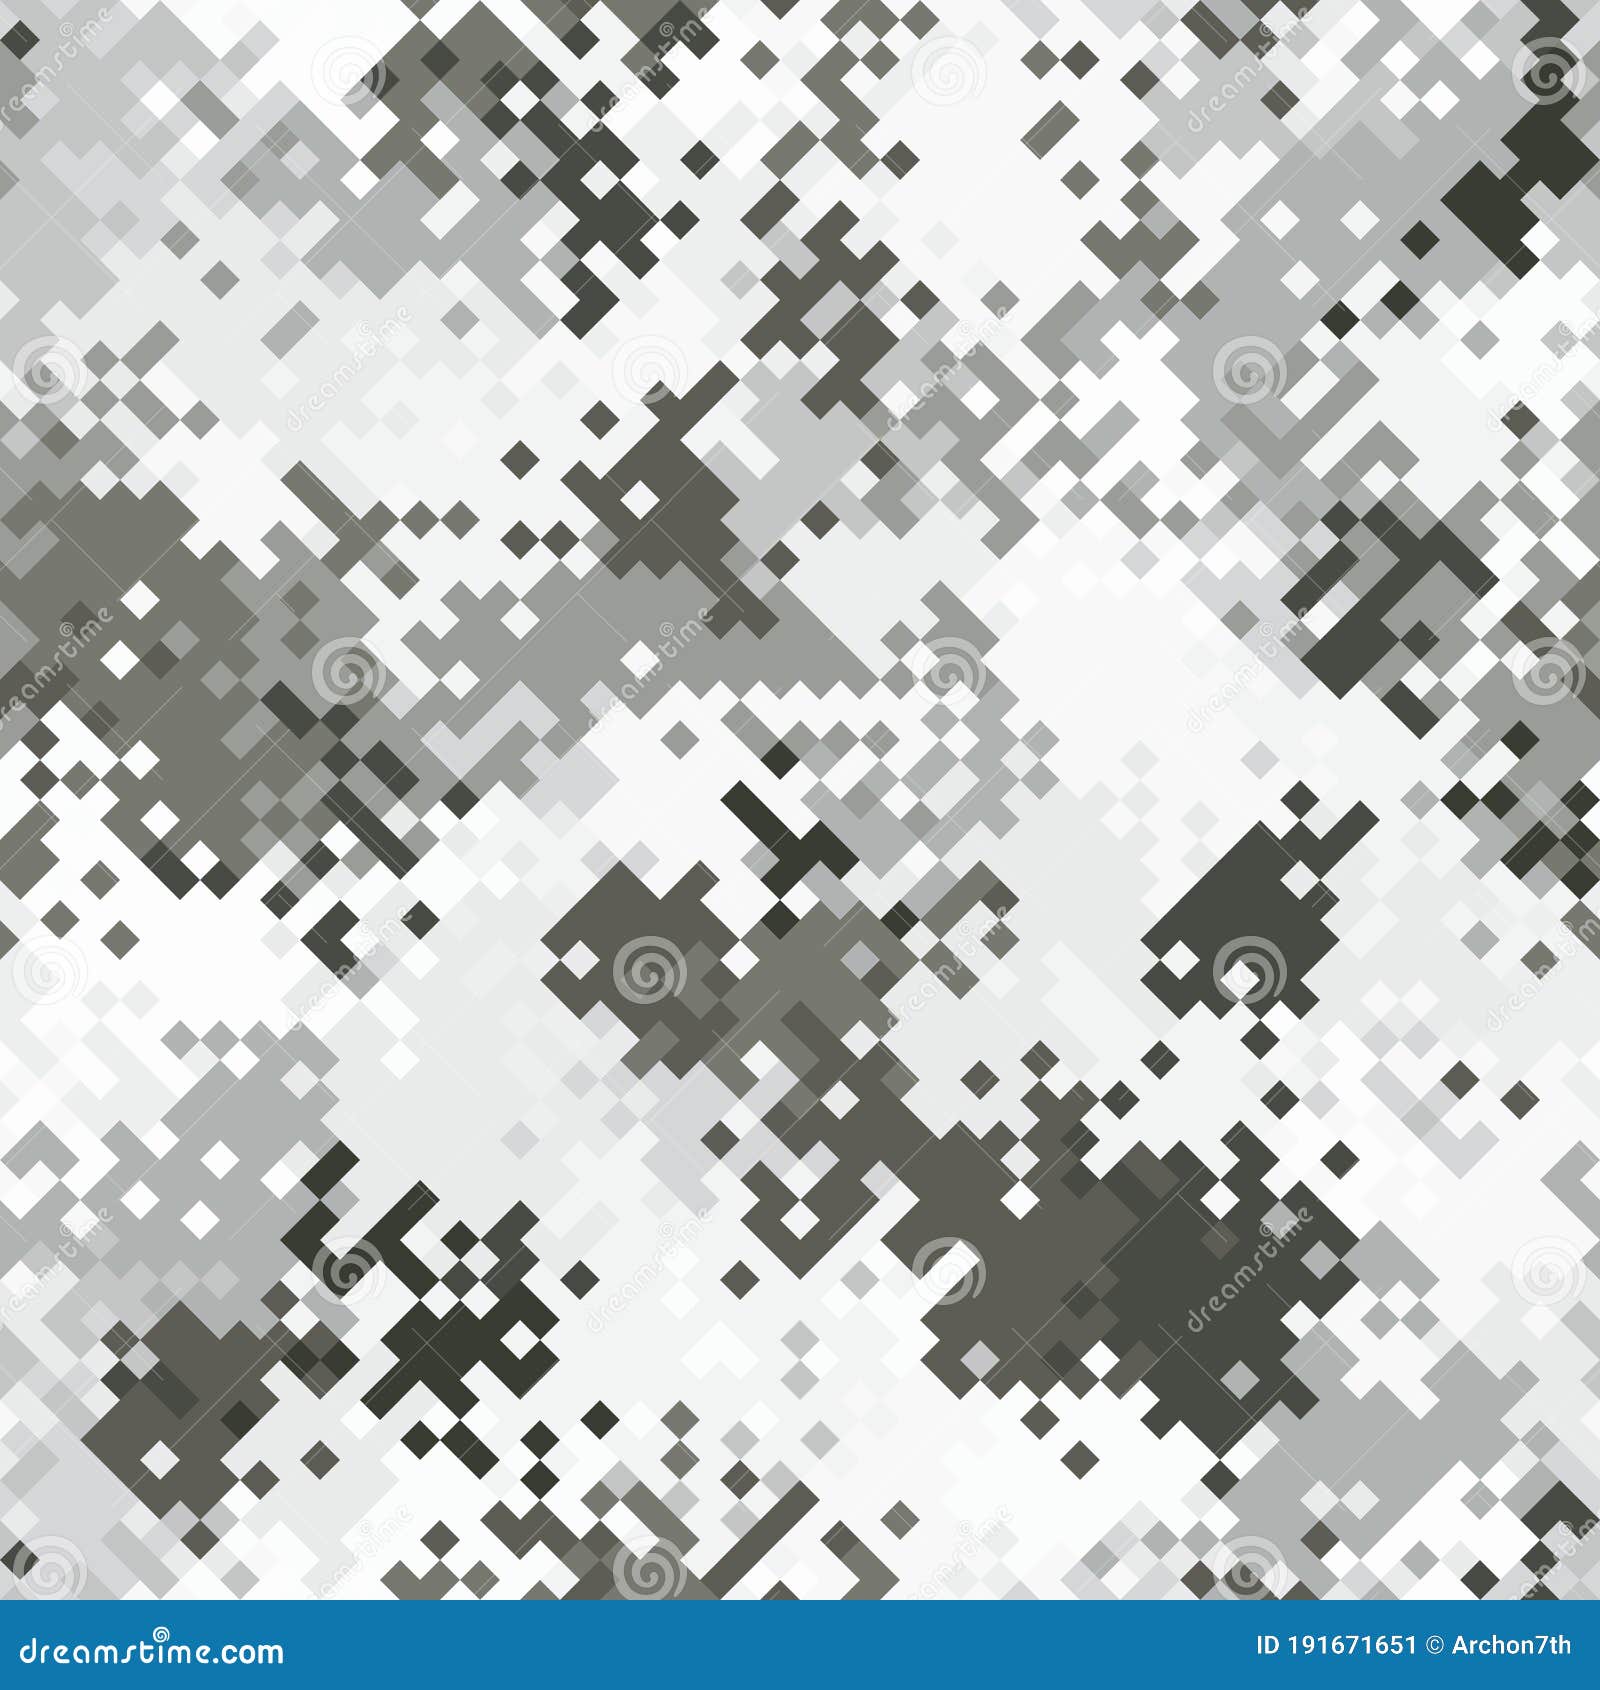 Seamless Digital Arctic Pixel Camo Texture Vector for Army Textile ...